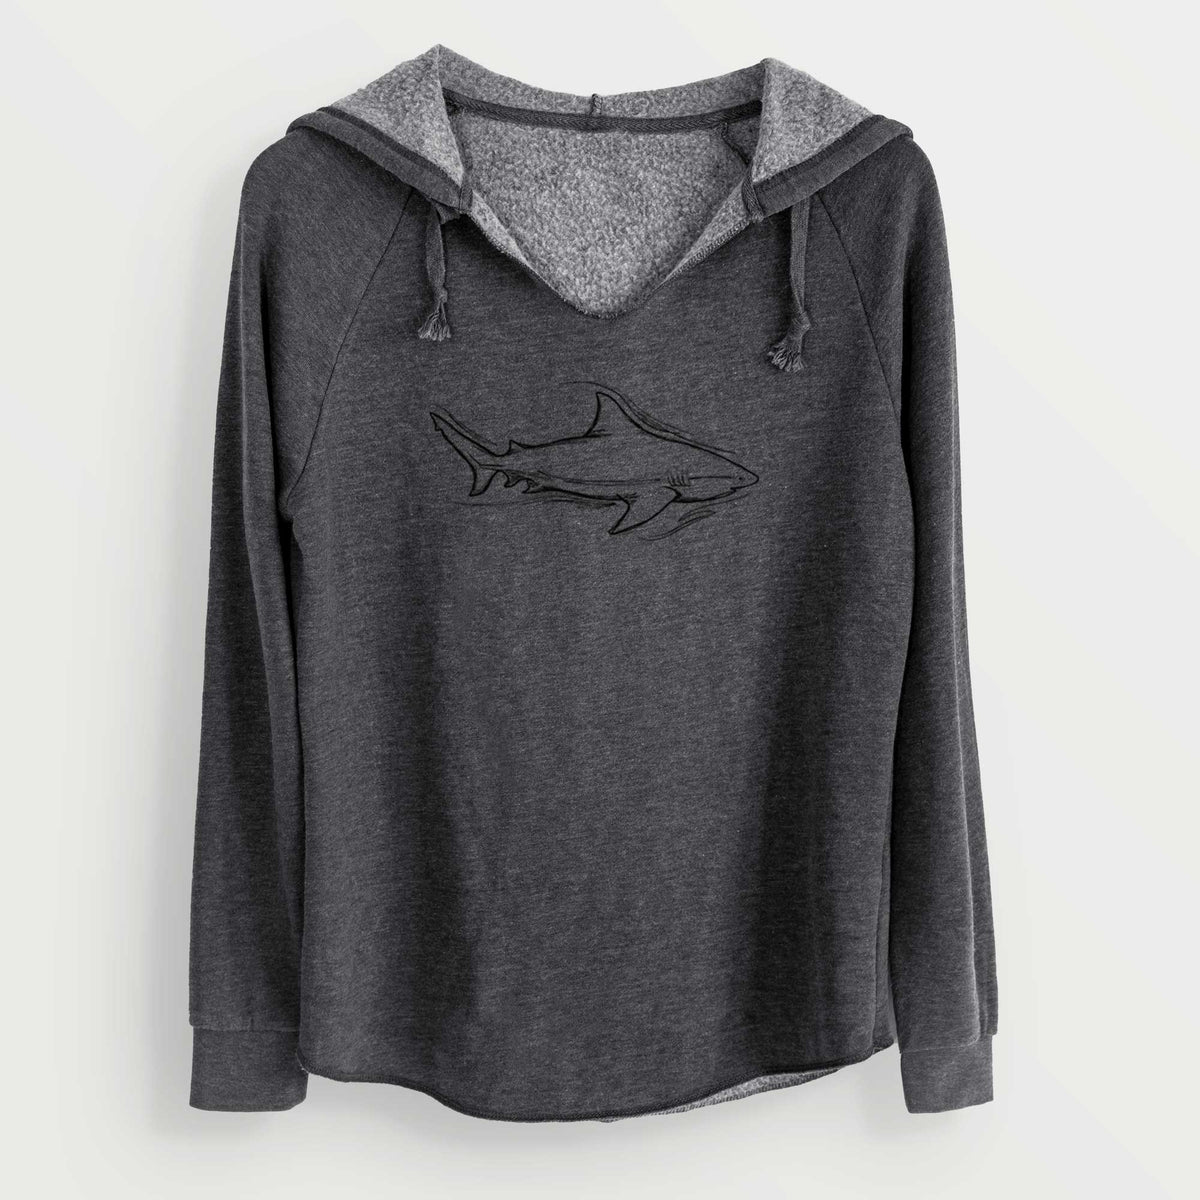 Bull Shark - Cali Wave Hooded Sweatshirt